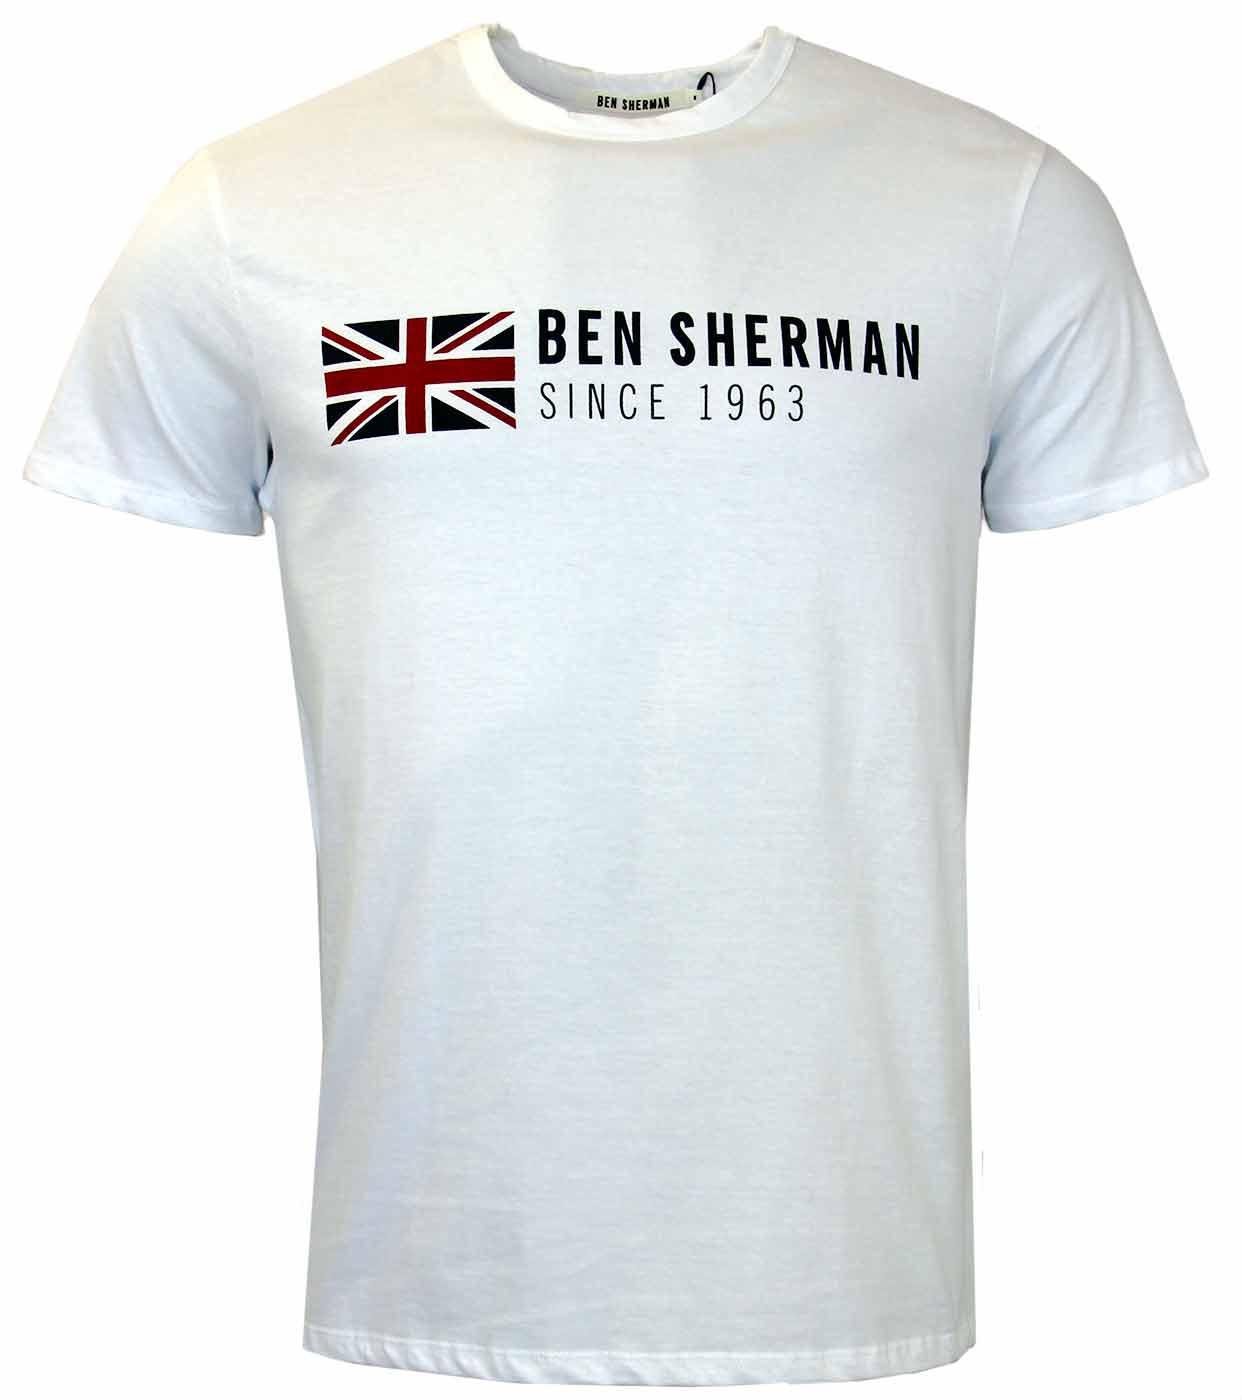 BEN SHERMAN Union Jack Retro Mod T-Shirt